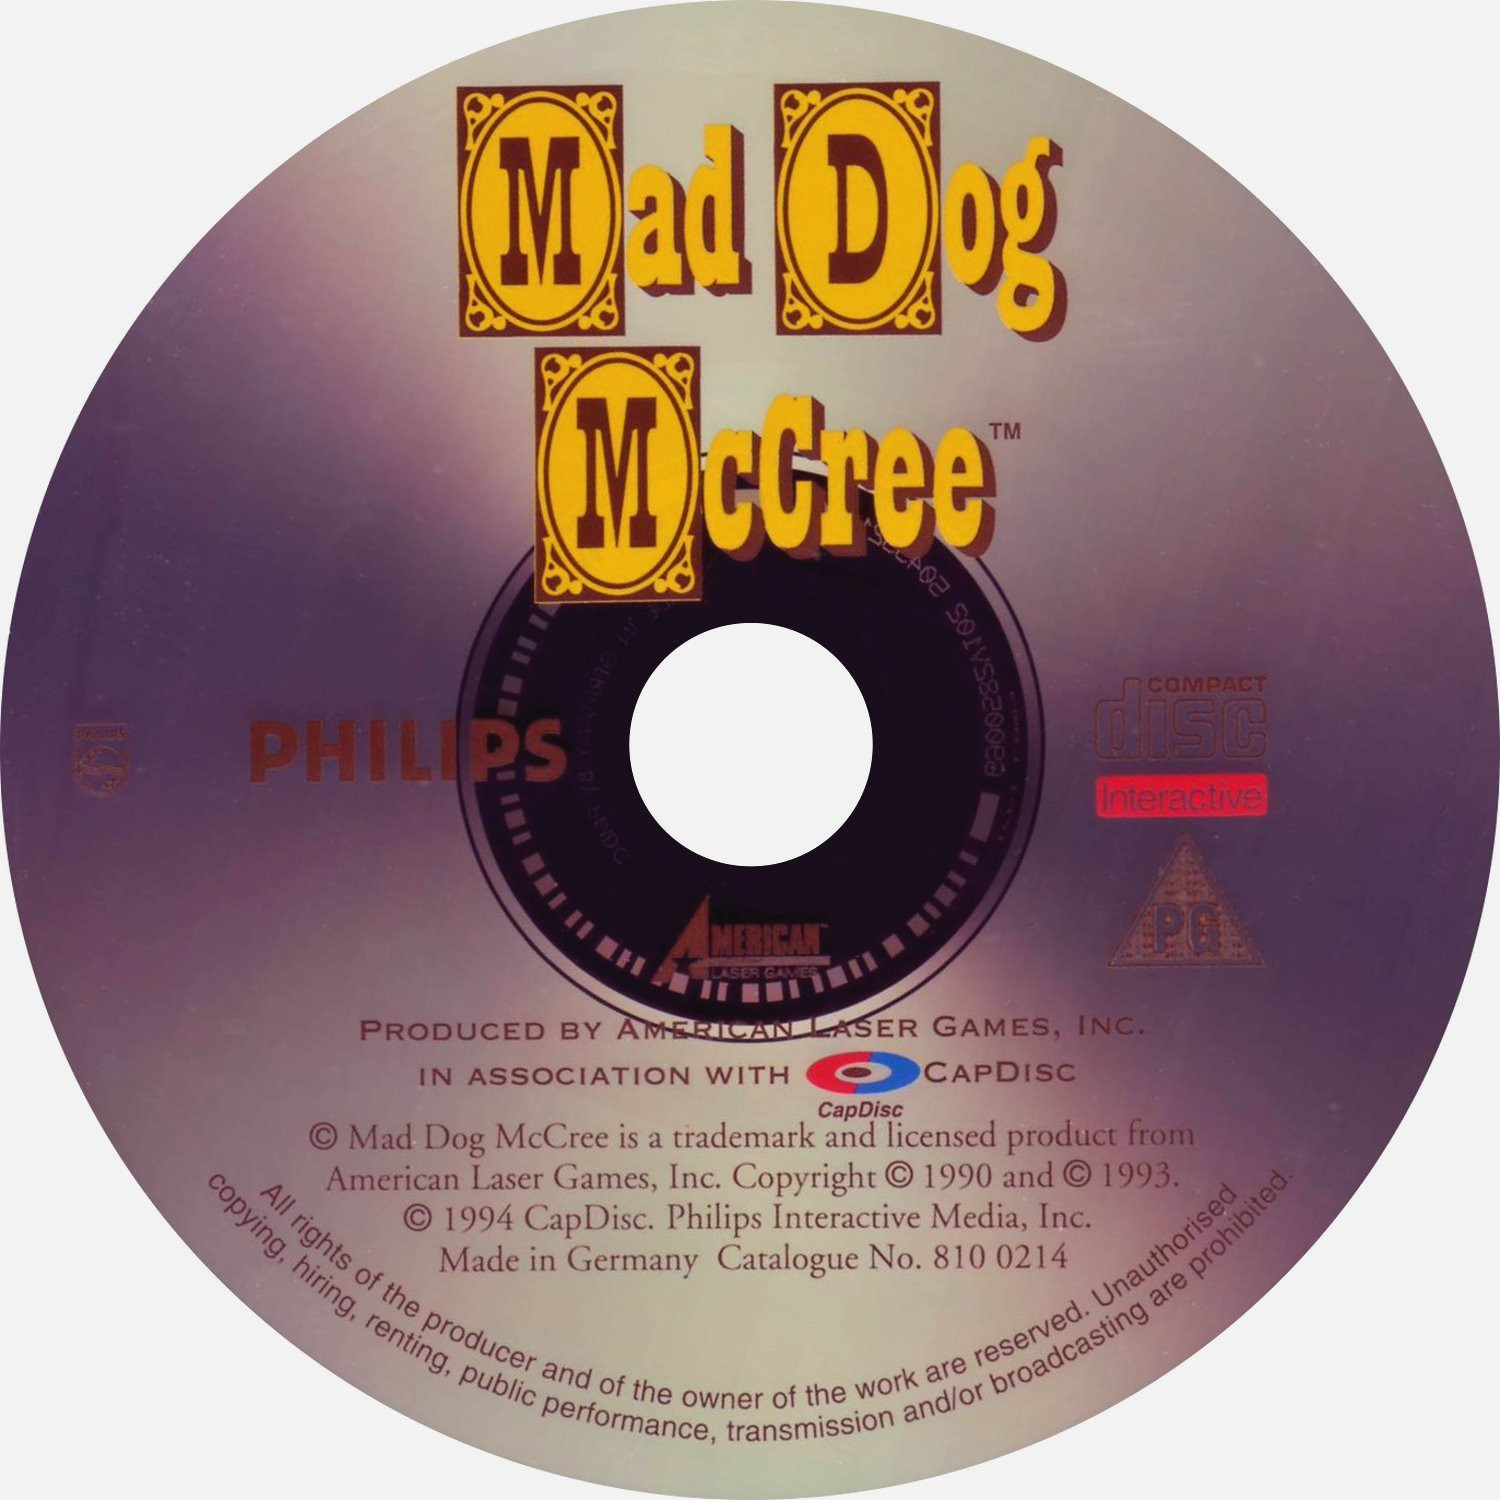 Mad Dog McCree™ – The World of CD-i